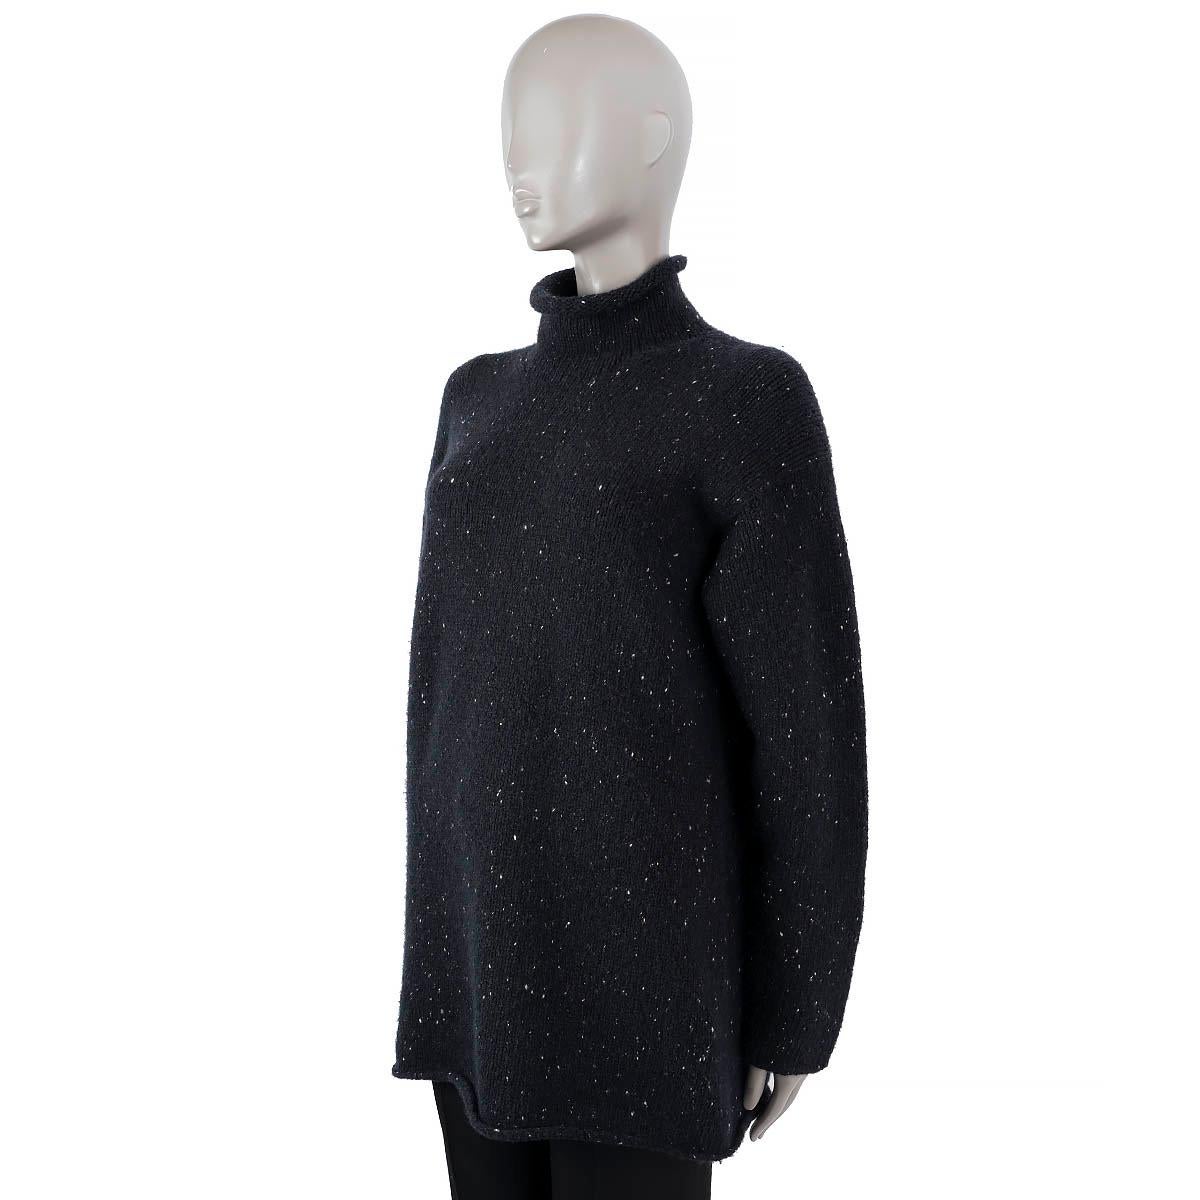 Women's HERMES black & white cashmere SPECKLED TURTLENECK Sweater XL